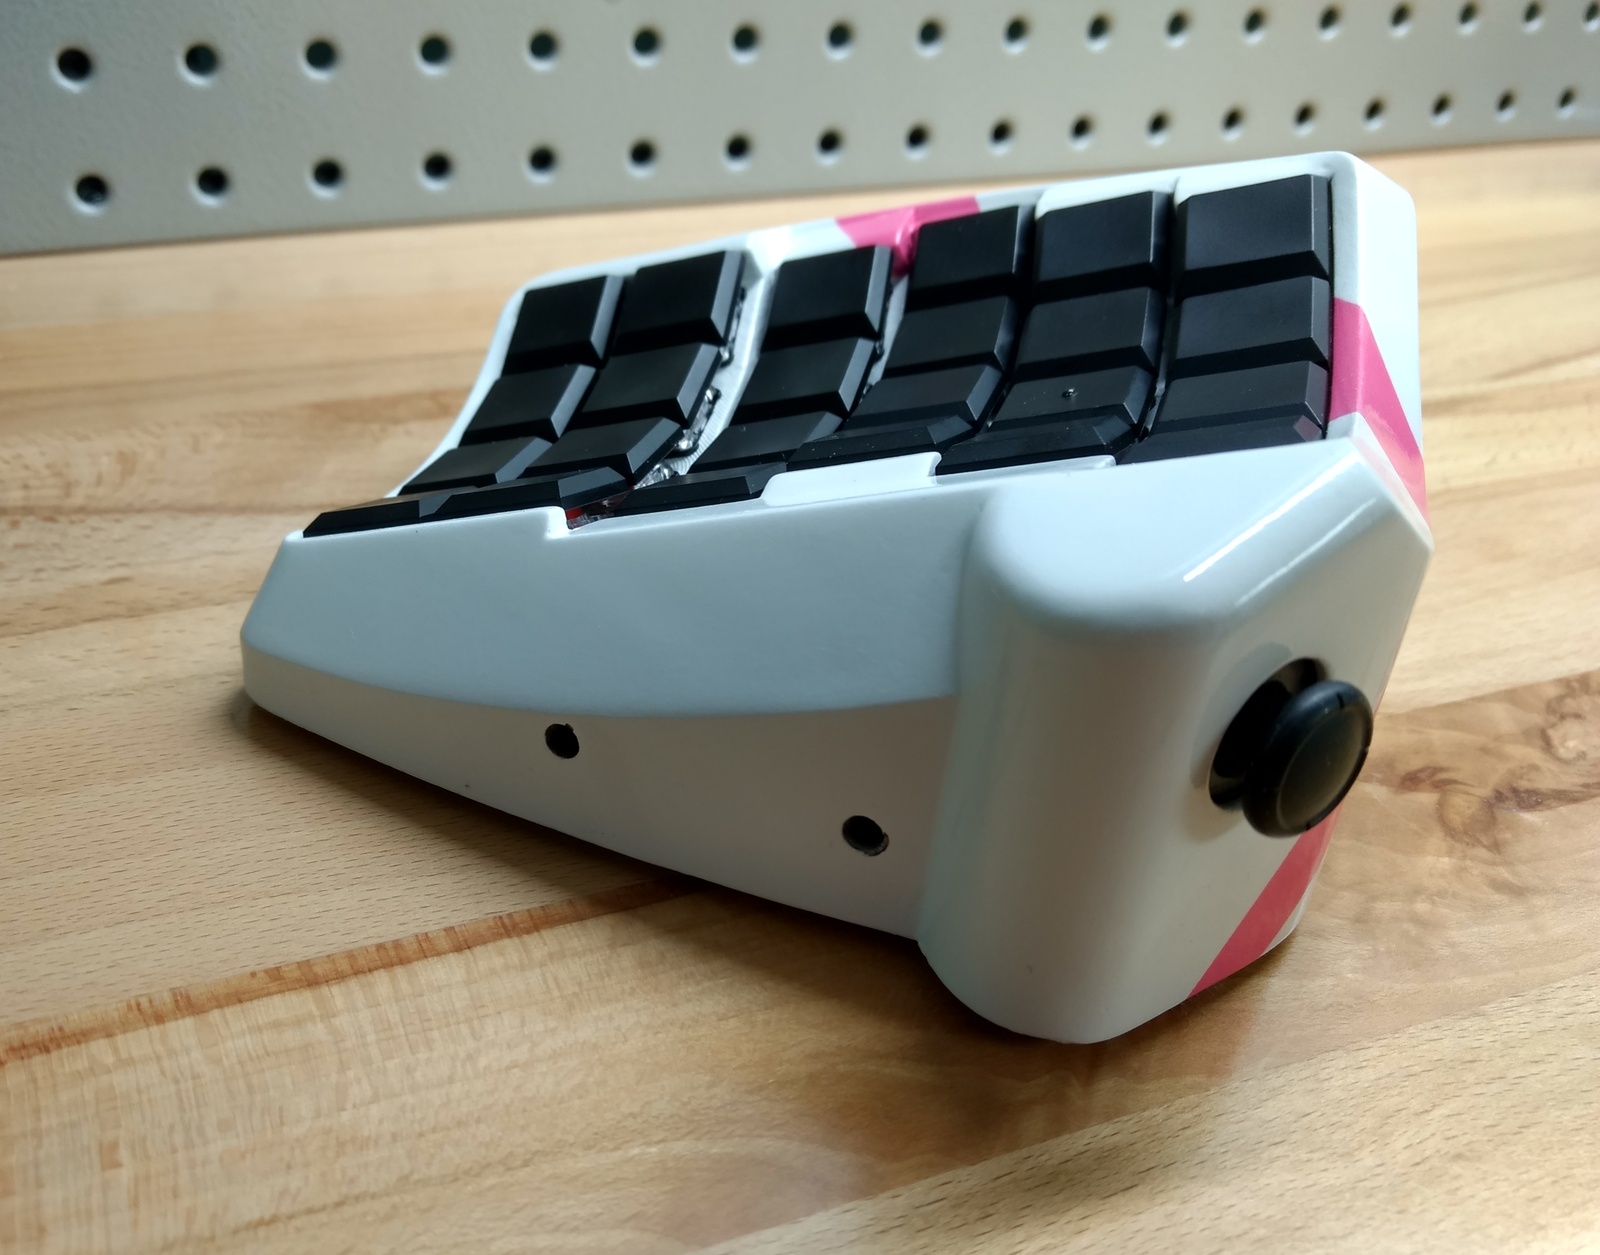 Sherbet keypad with joystick